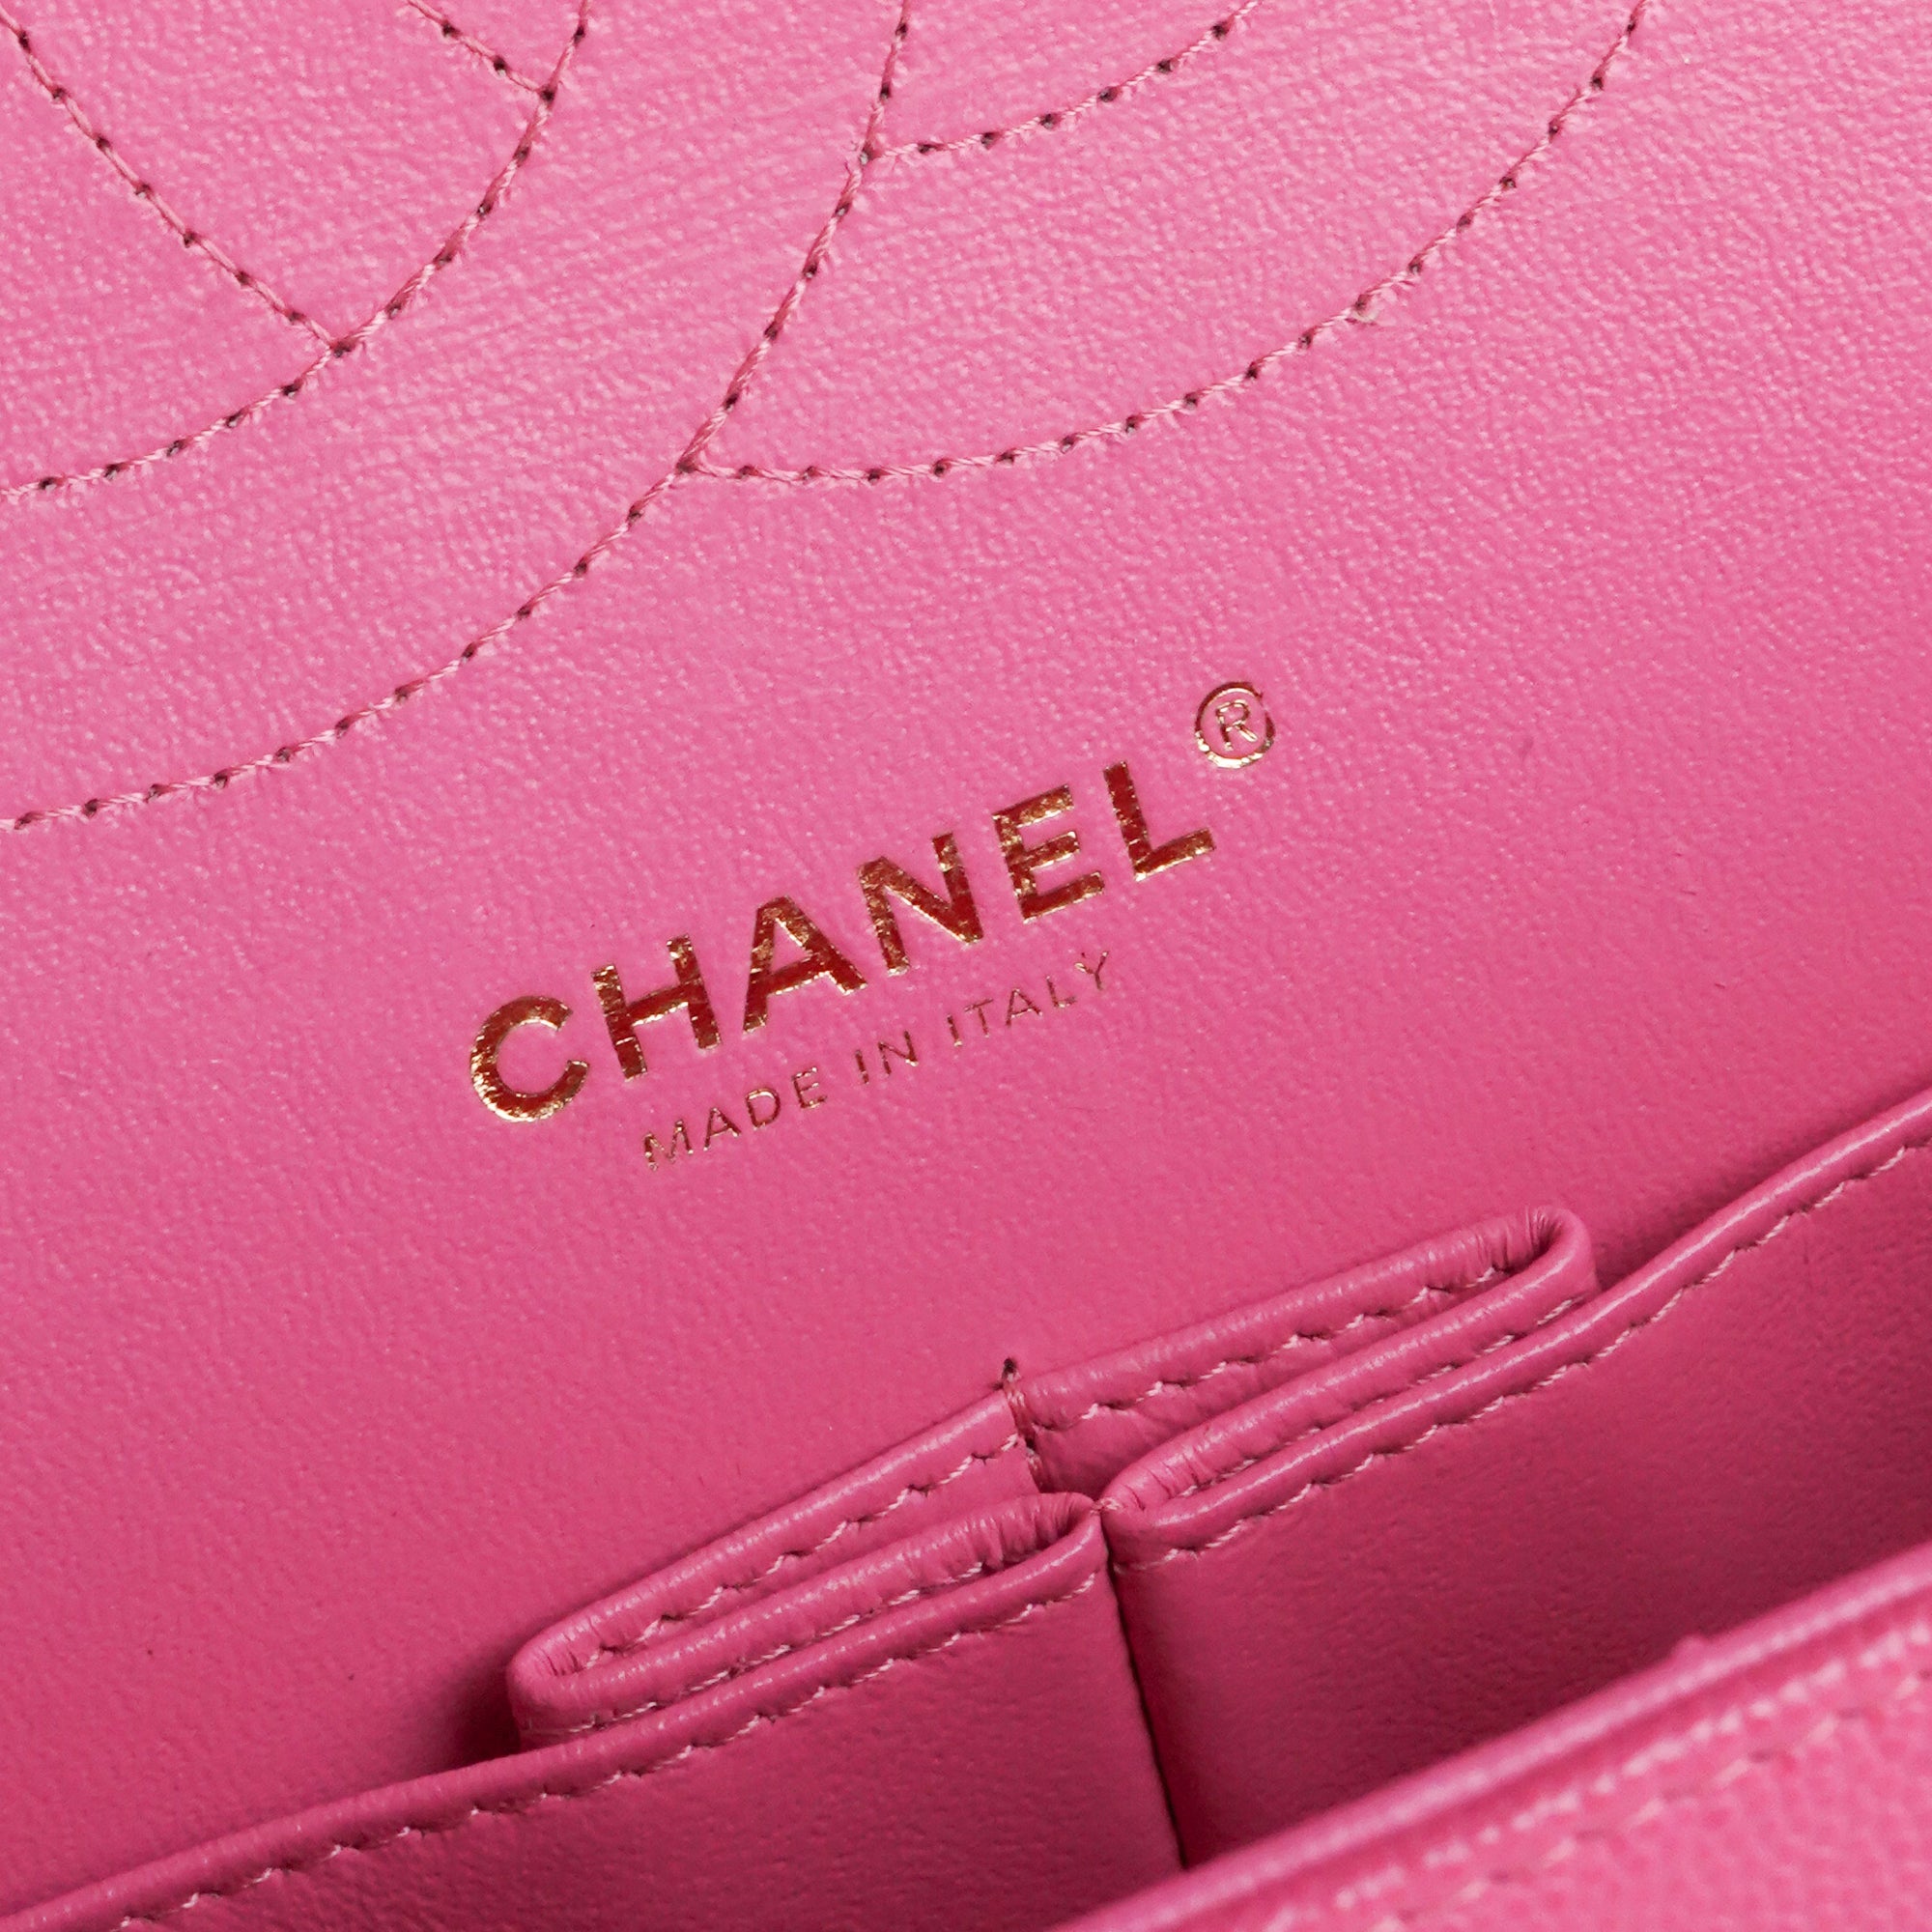 Chanel Gabrielle Small Pink - THE PURSE AFFAIR